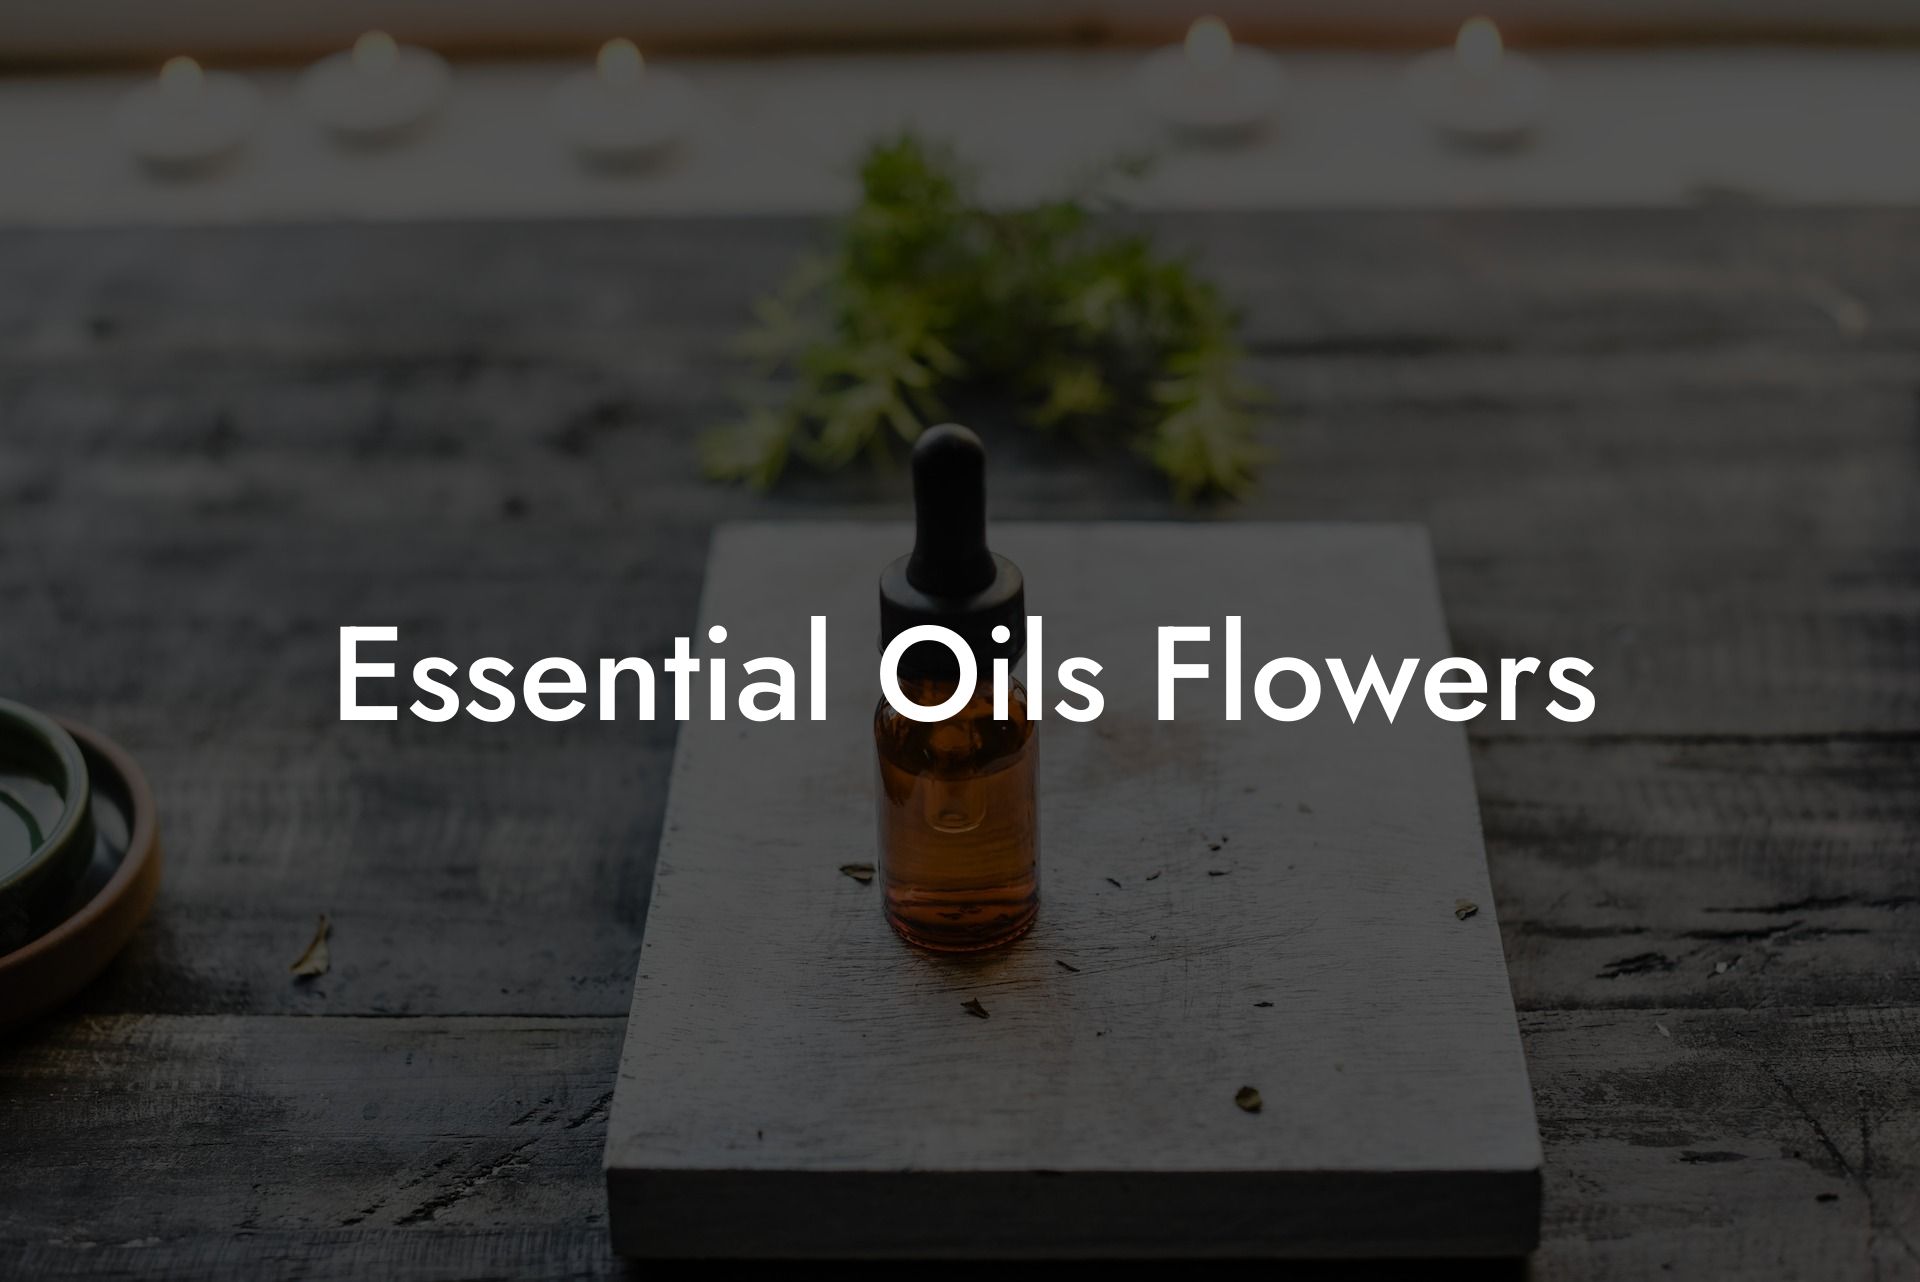 Essential Oils Flowers